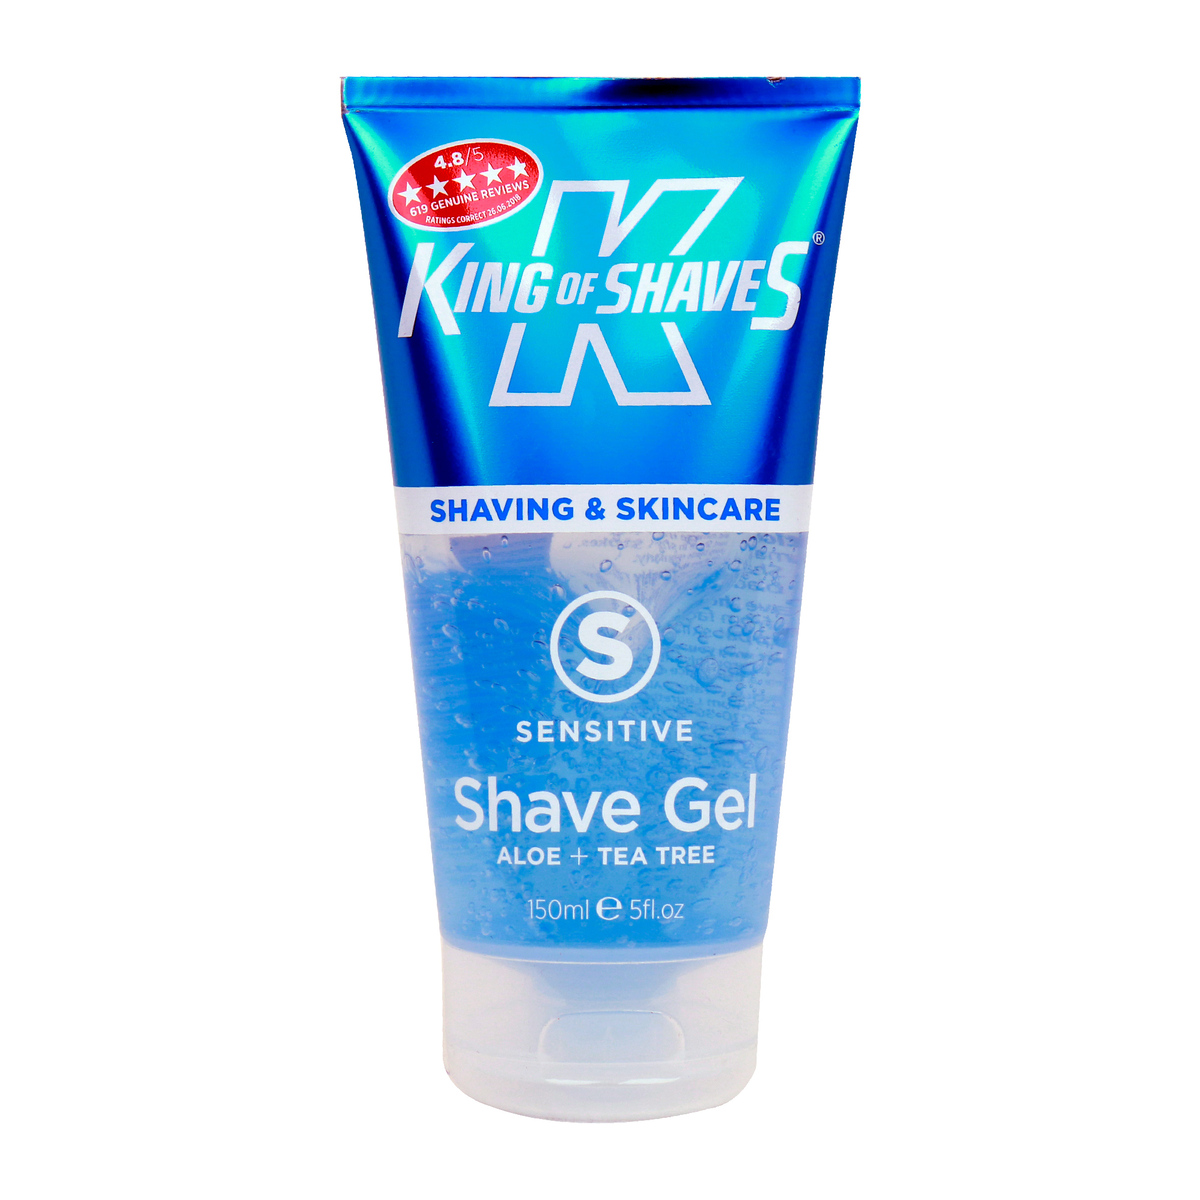 King Of Shave Sensitive Shave Gel Aloe + Tea Tree 150ml